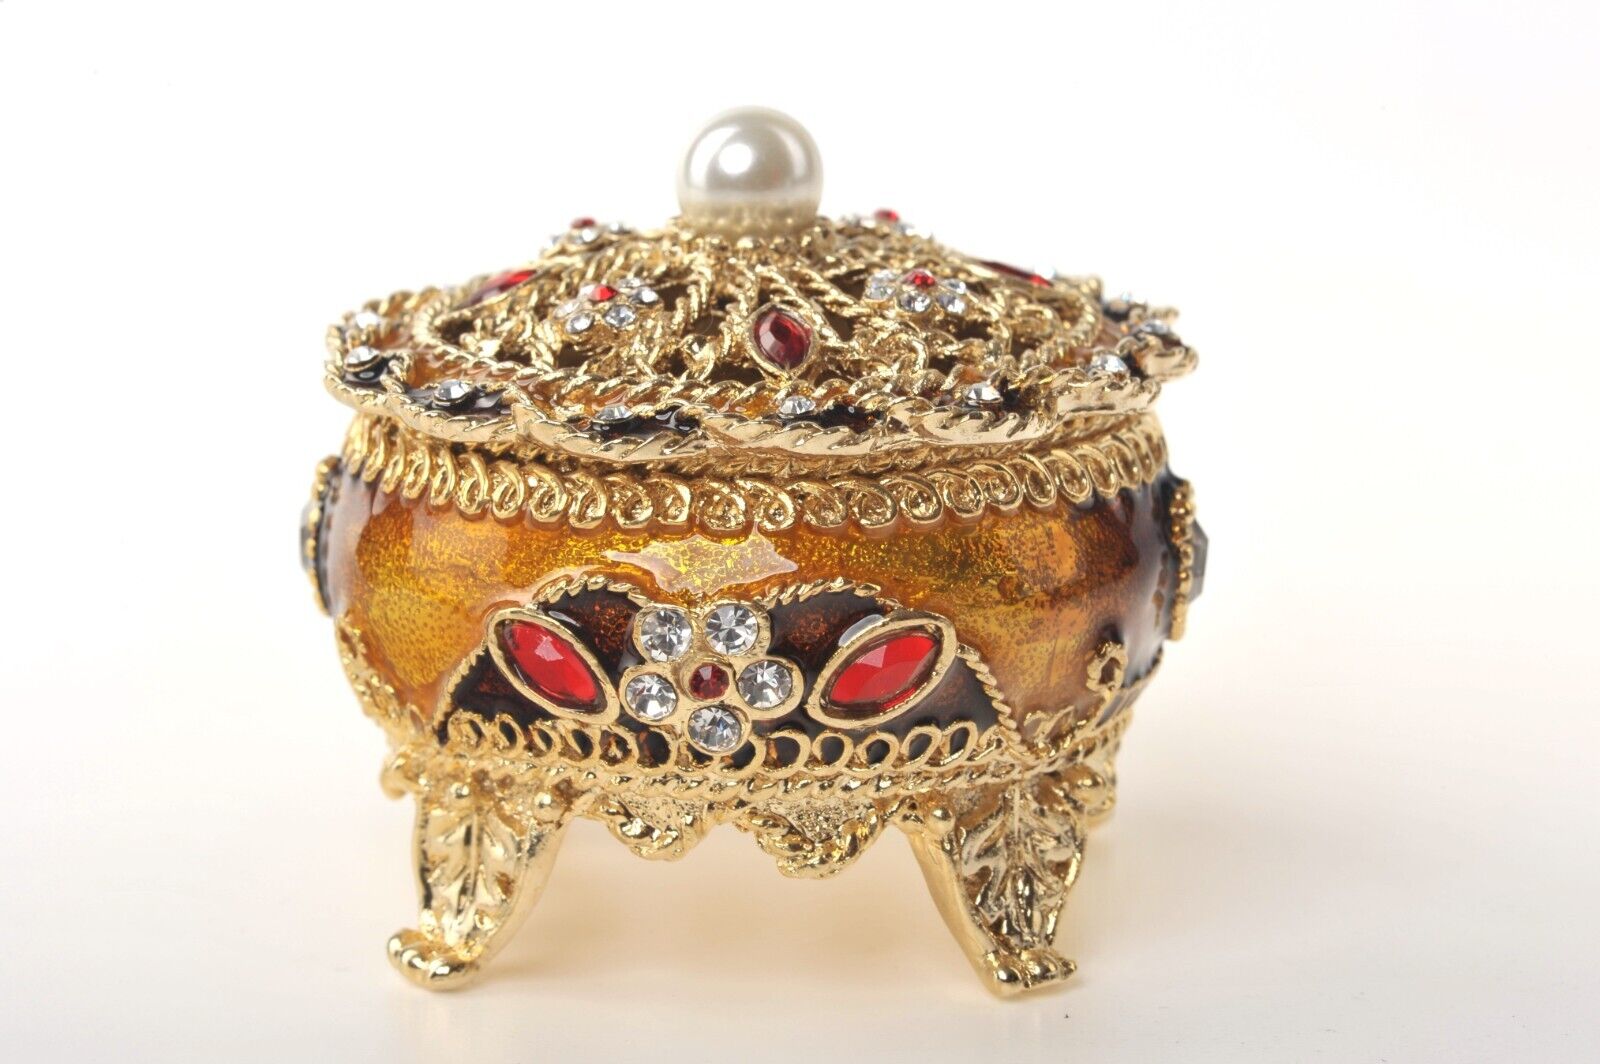 Keren Kopal Vintage Style trinket box hand made with Austrian crystal